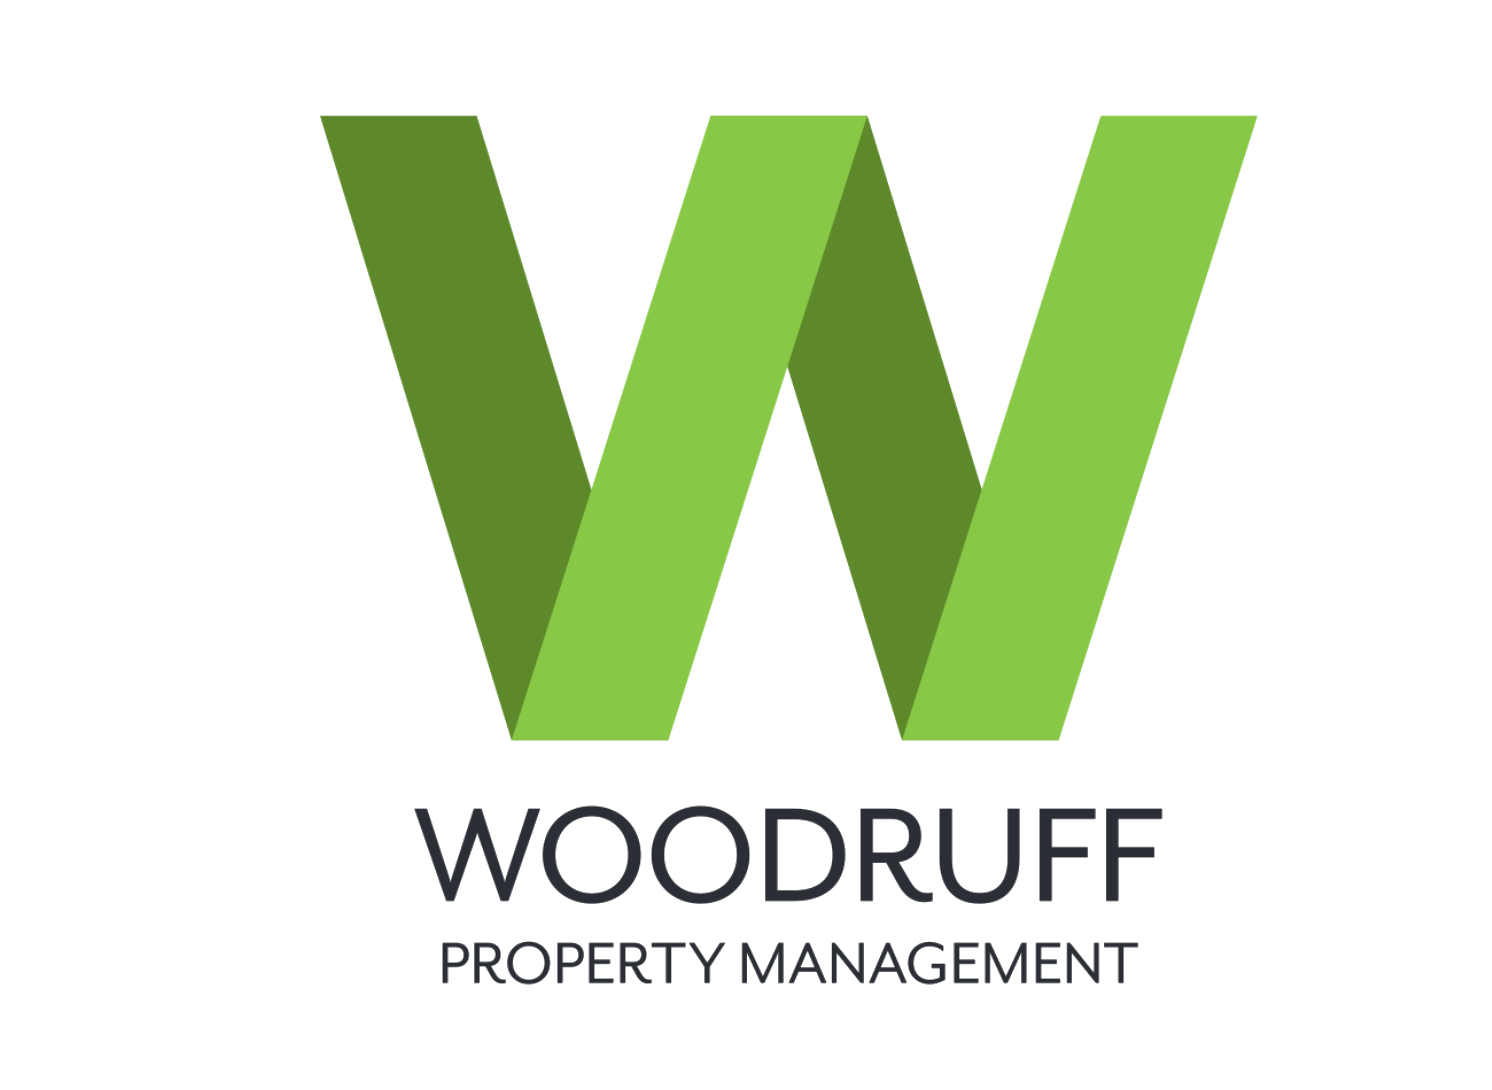 Woodruff Property Management